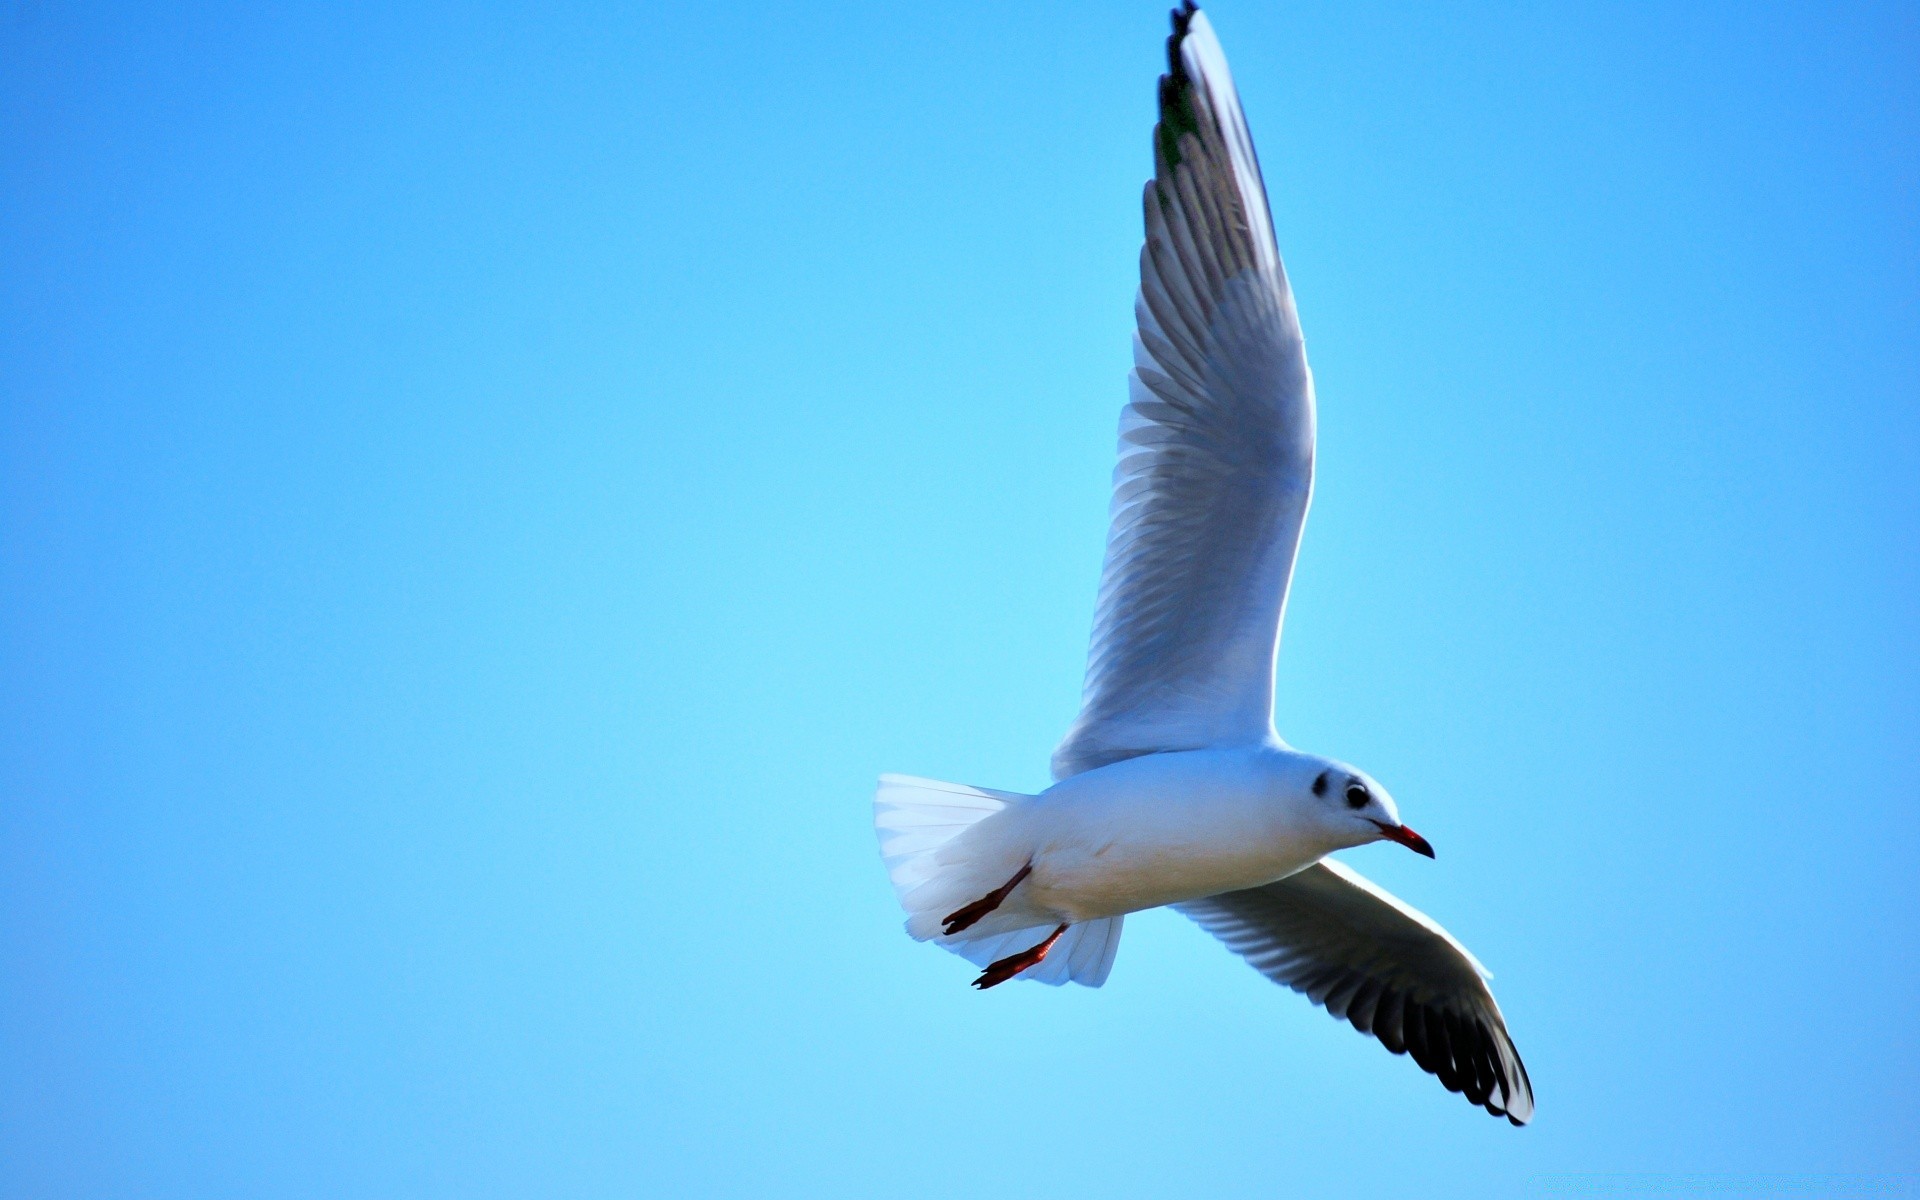 seagull bird seagulls flight wildlife sky nature outdoors freedom fly pigeon